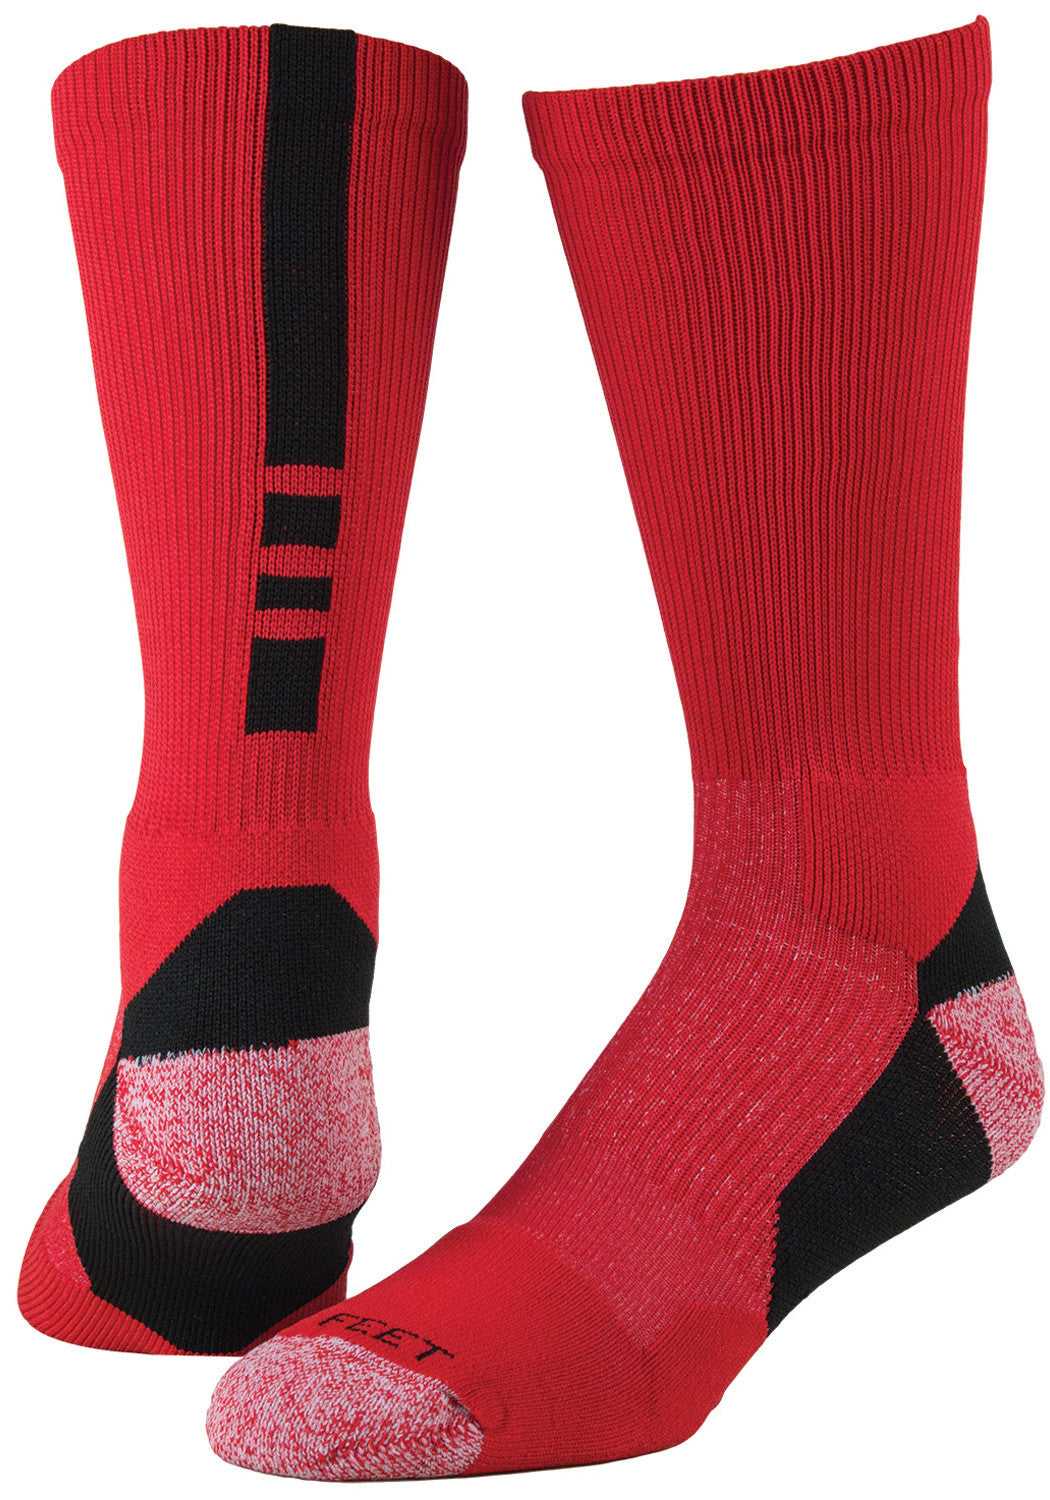 Pro Feet 238 Pro Feet Performance Shooter 2.0 Socks - Red Black - HIT a Double